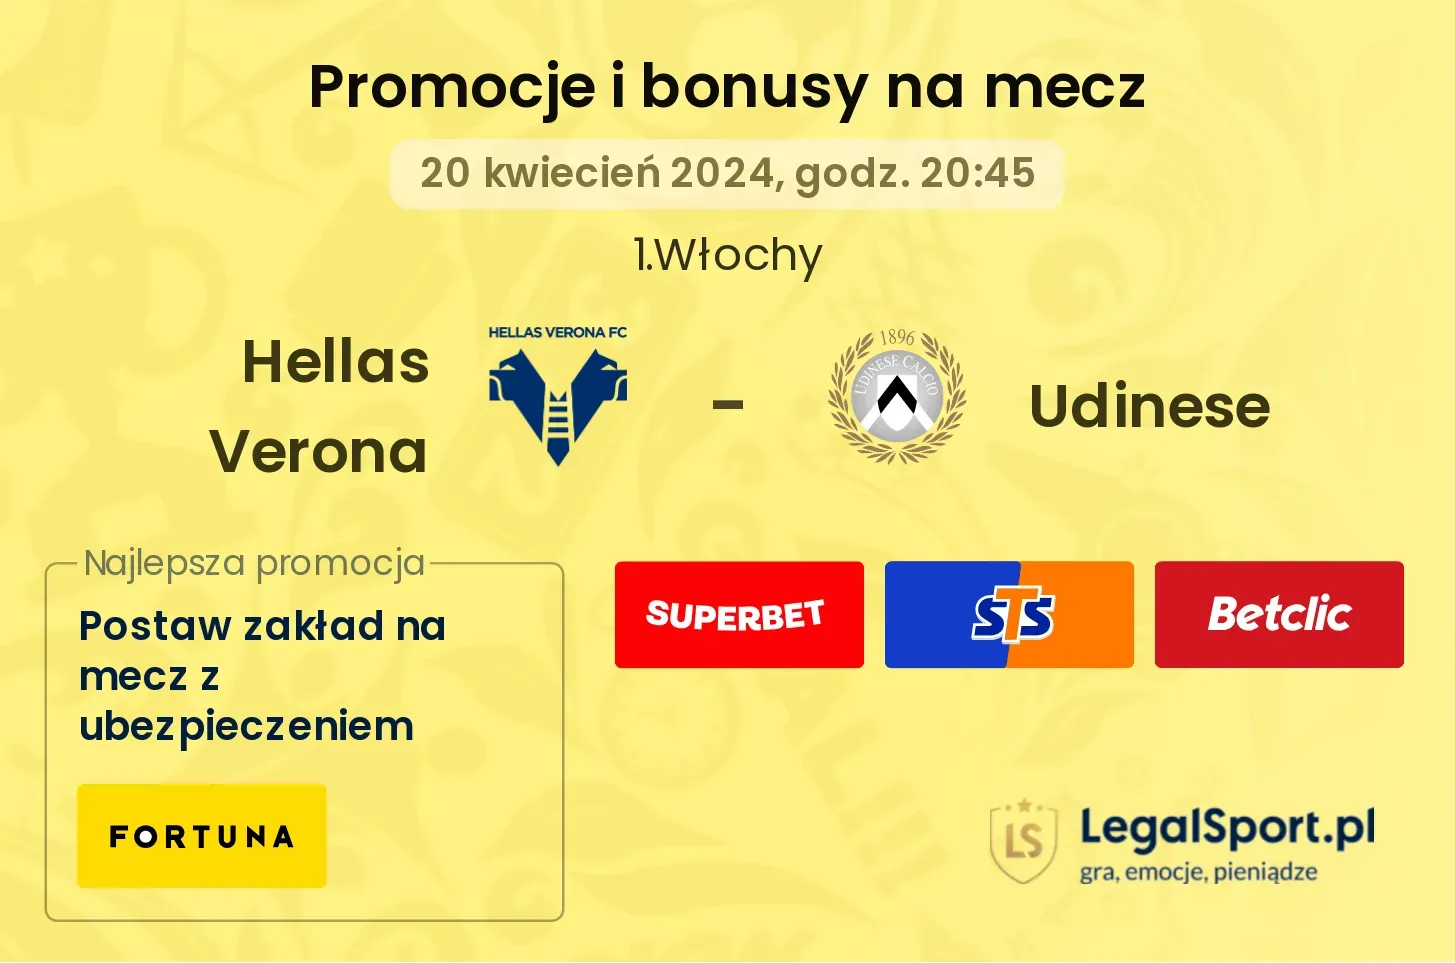 Hellas Verona - Udinese promocje bonusy na mecz